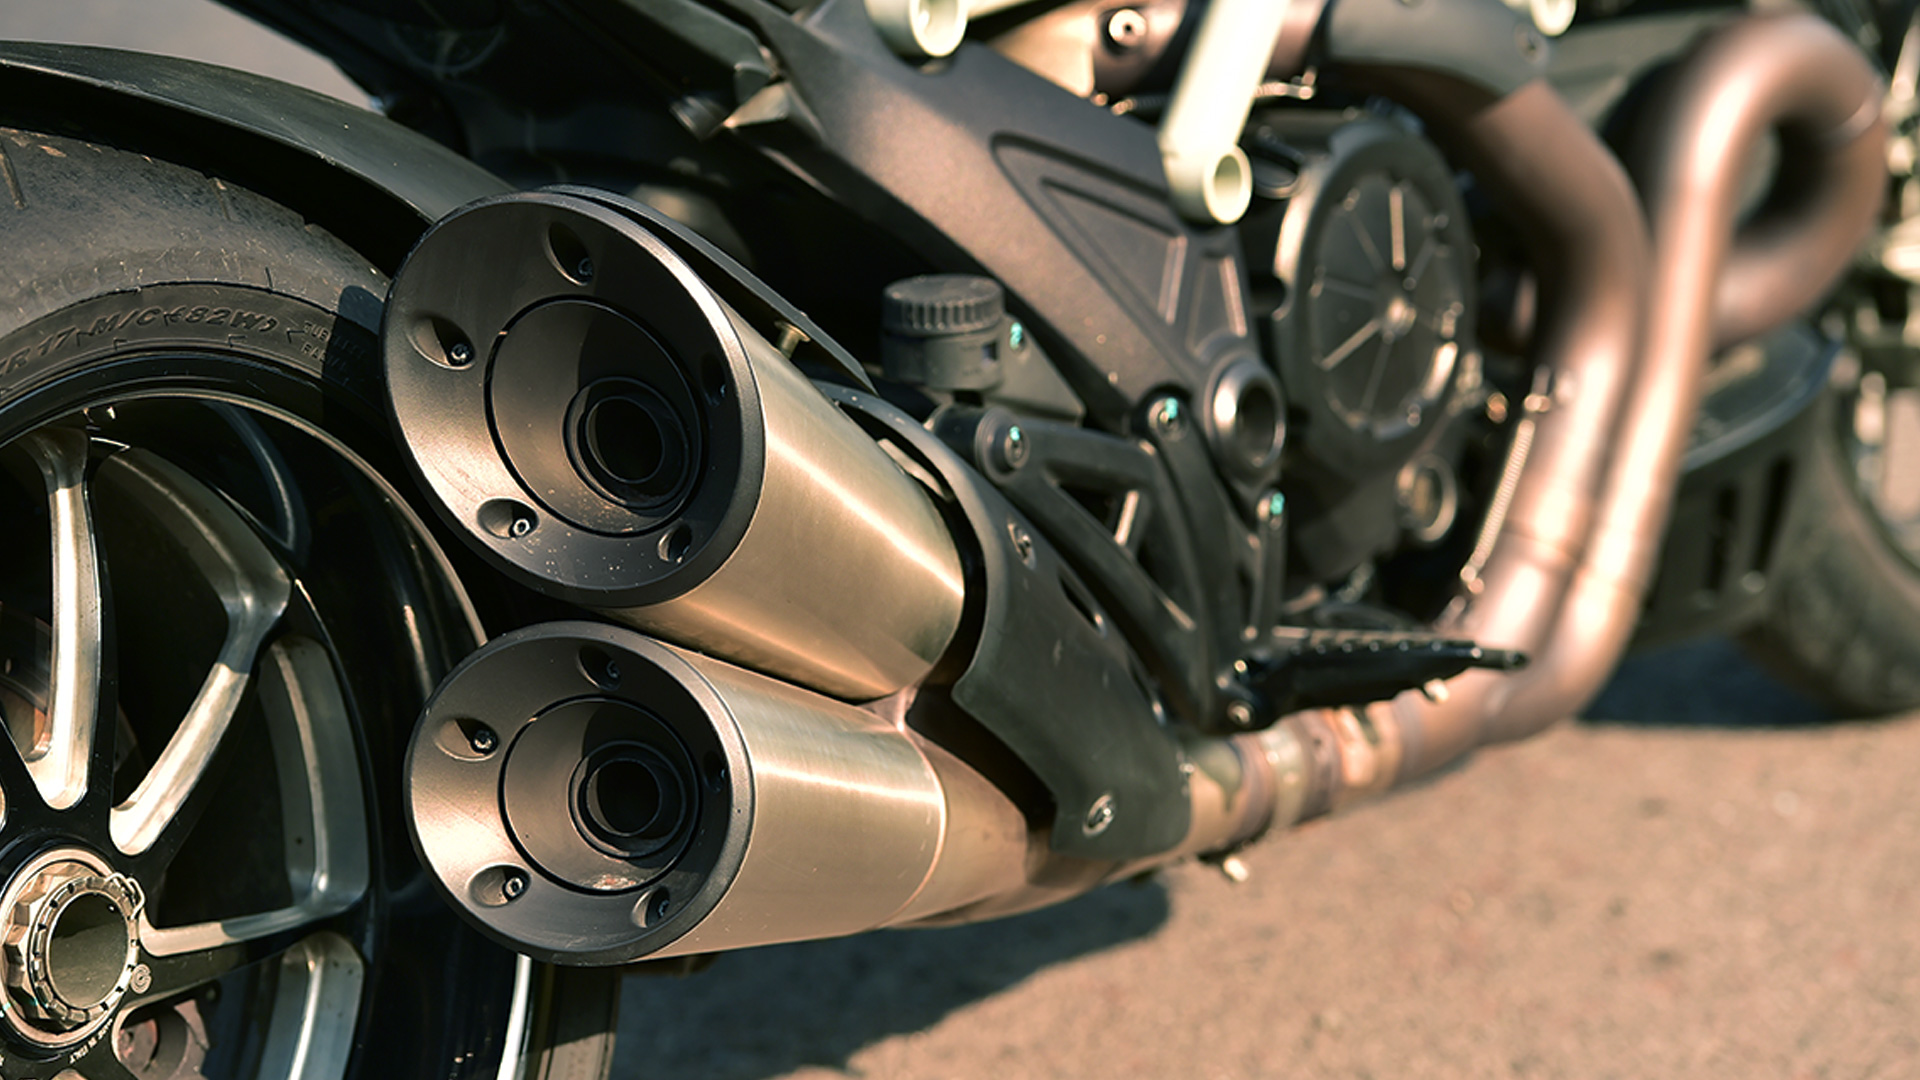 Ducati Diavel 2015 Carbon